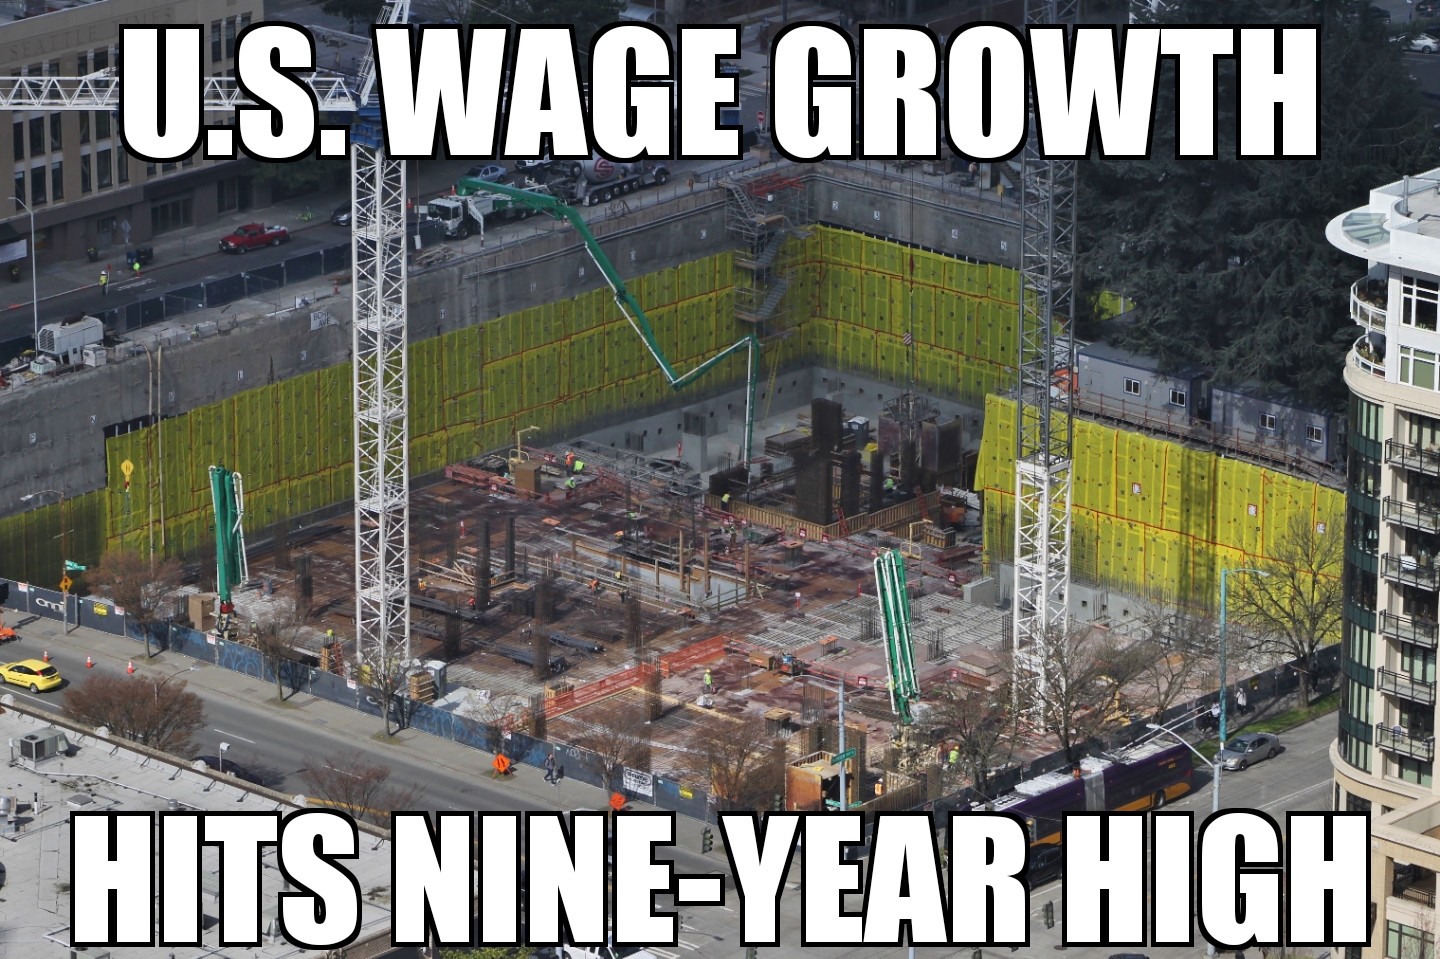 U.S. wage growth hits 9-year high